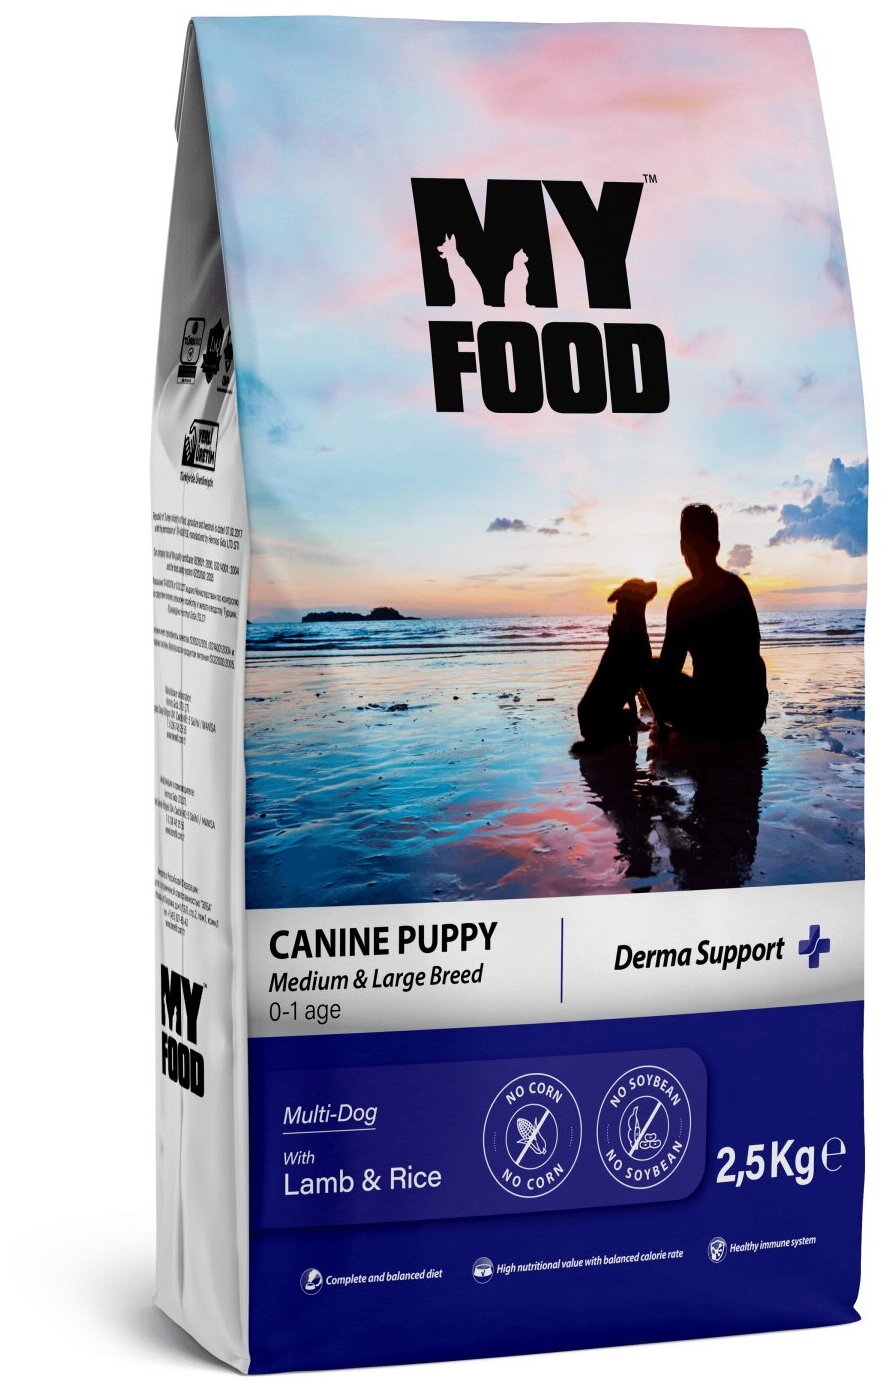 Myfood Canine Puppy Medium & Large Breed Multi-Dog with Lamb & Rice 2,5 кг сухой корм для щенков с ягненком и рисом